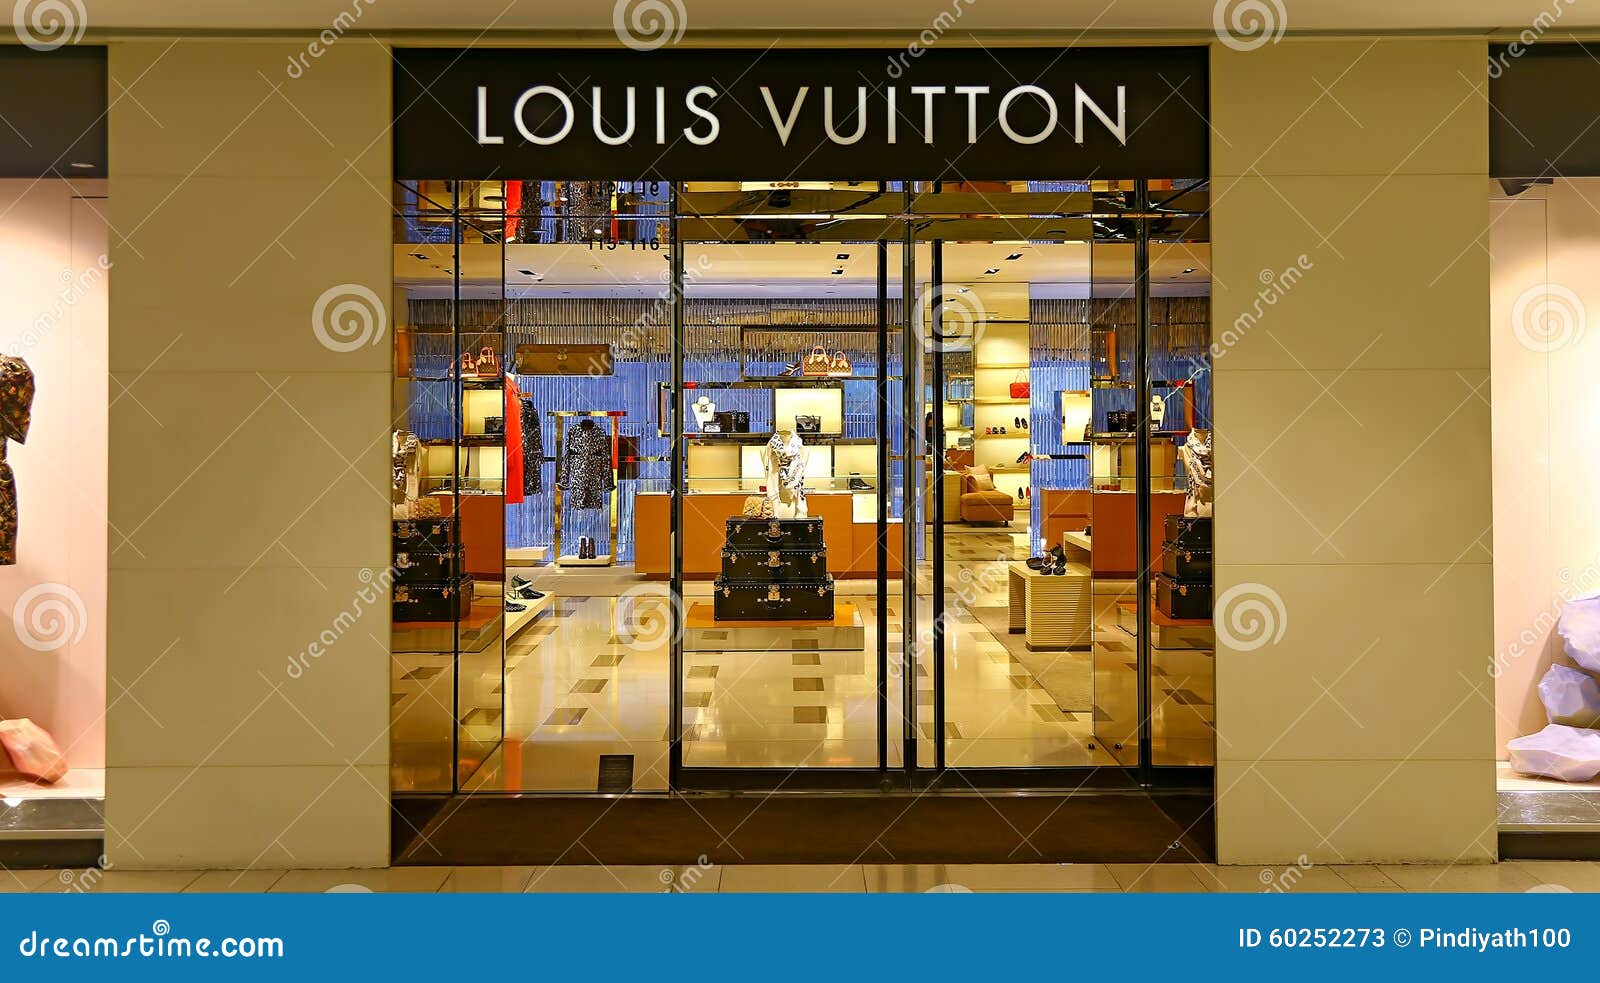 Louis Vuitton Boutique Editorial Stock Photo - Image: 60252273